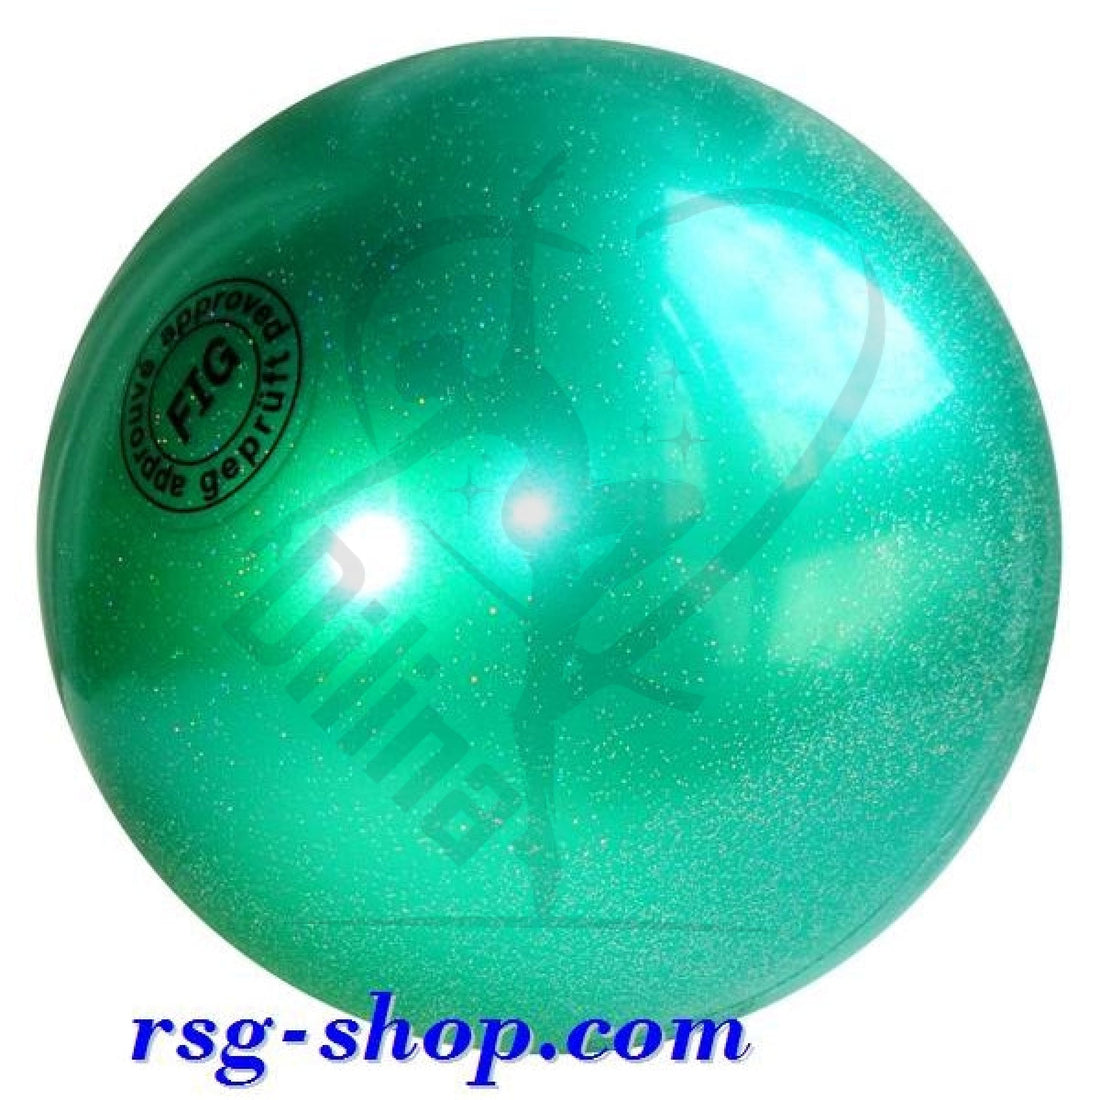 Tuloni Metallic Glitter Ball 16Cm Green Balls